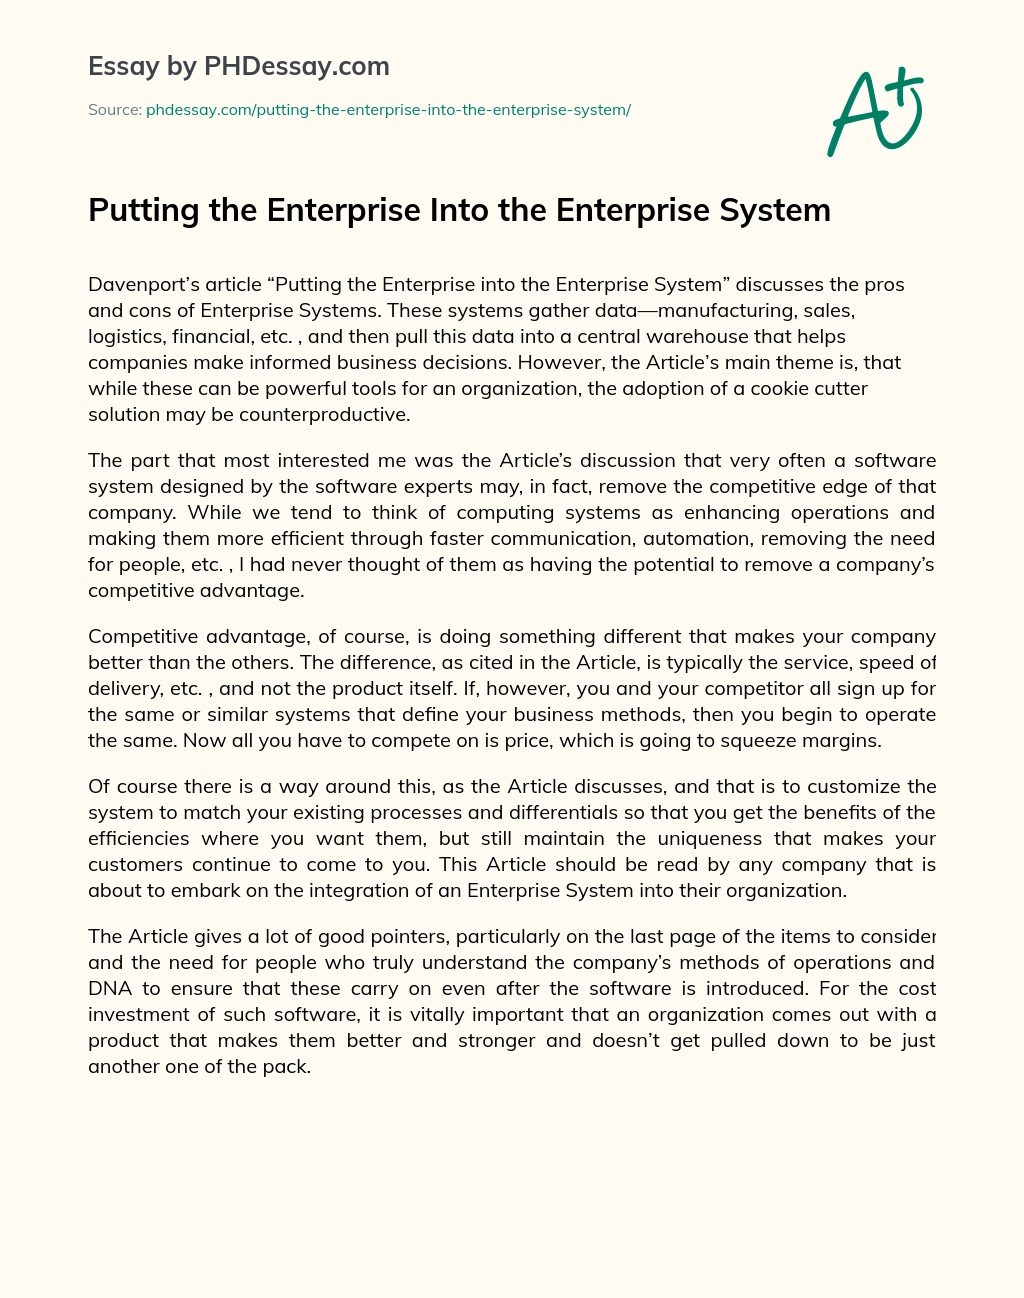 Putting the Enterprise Into the Enterprise System essay